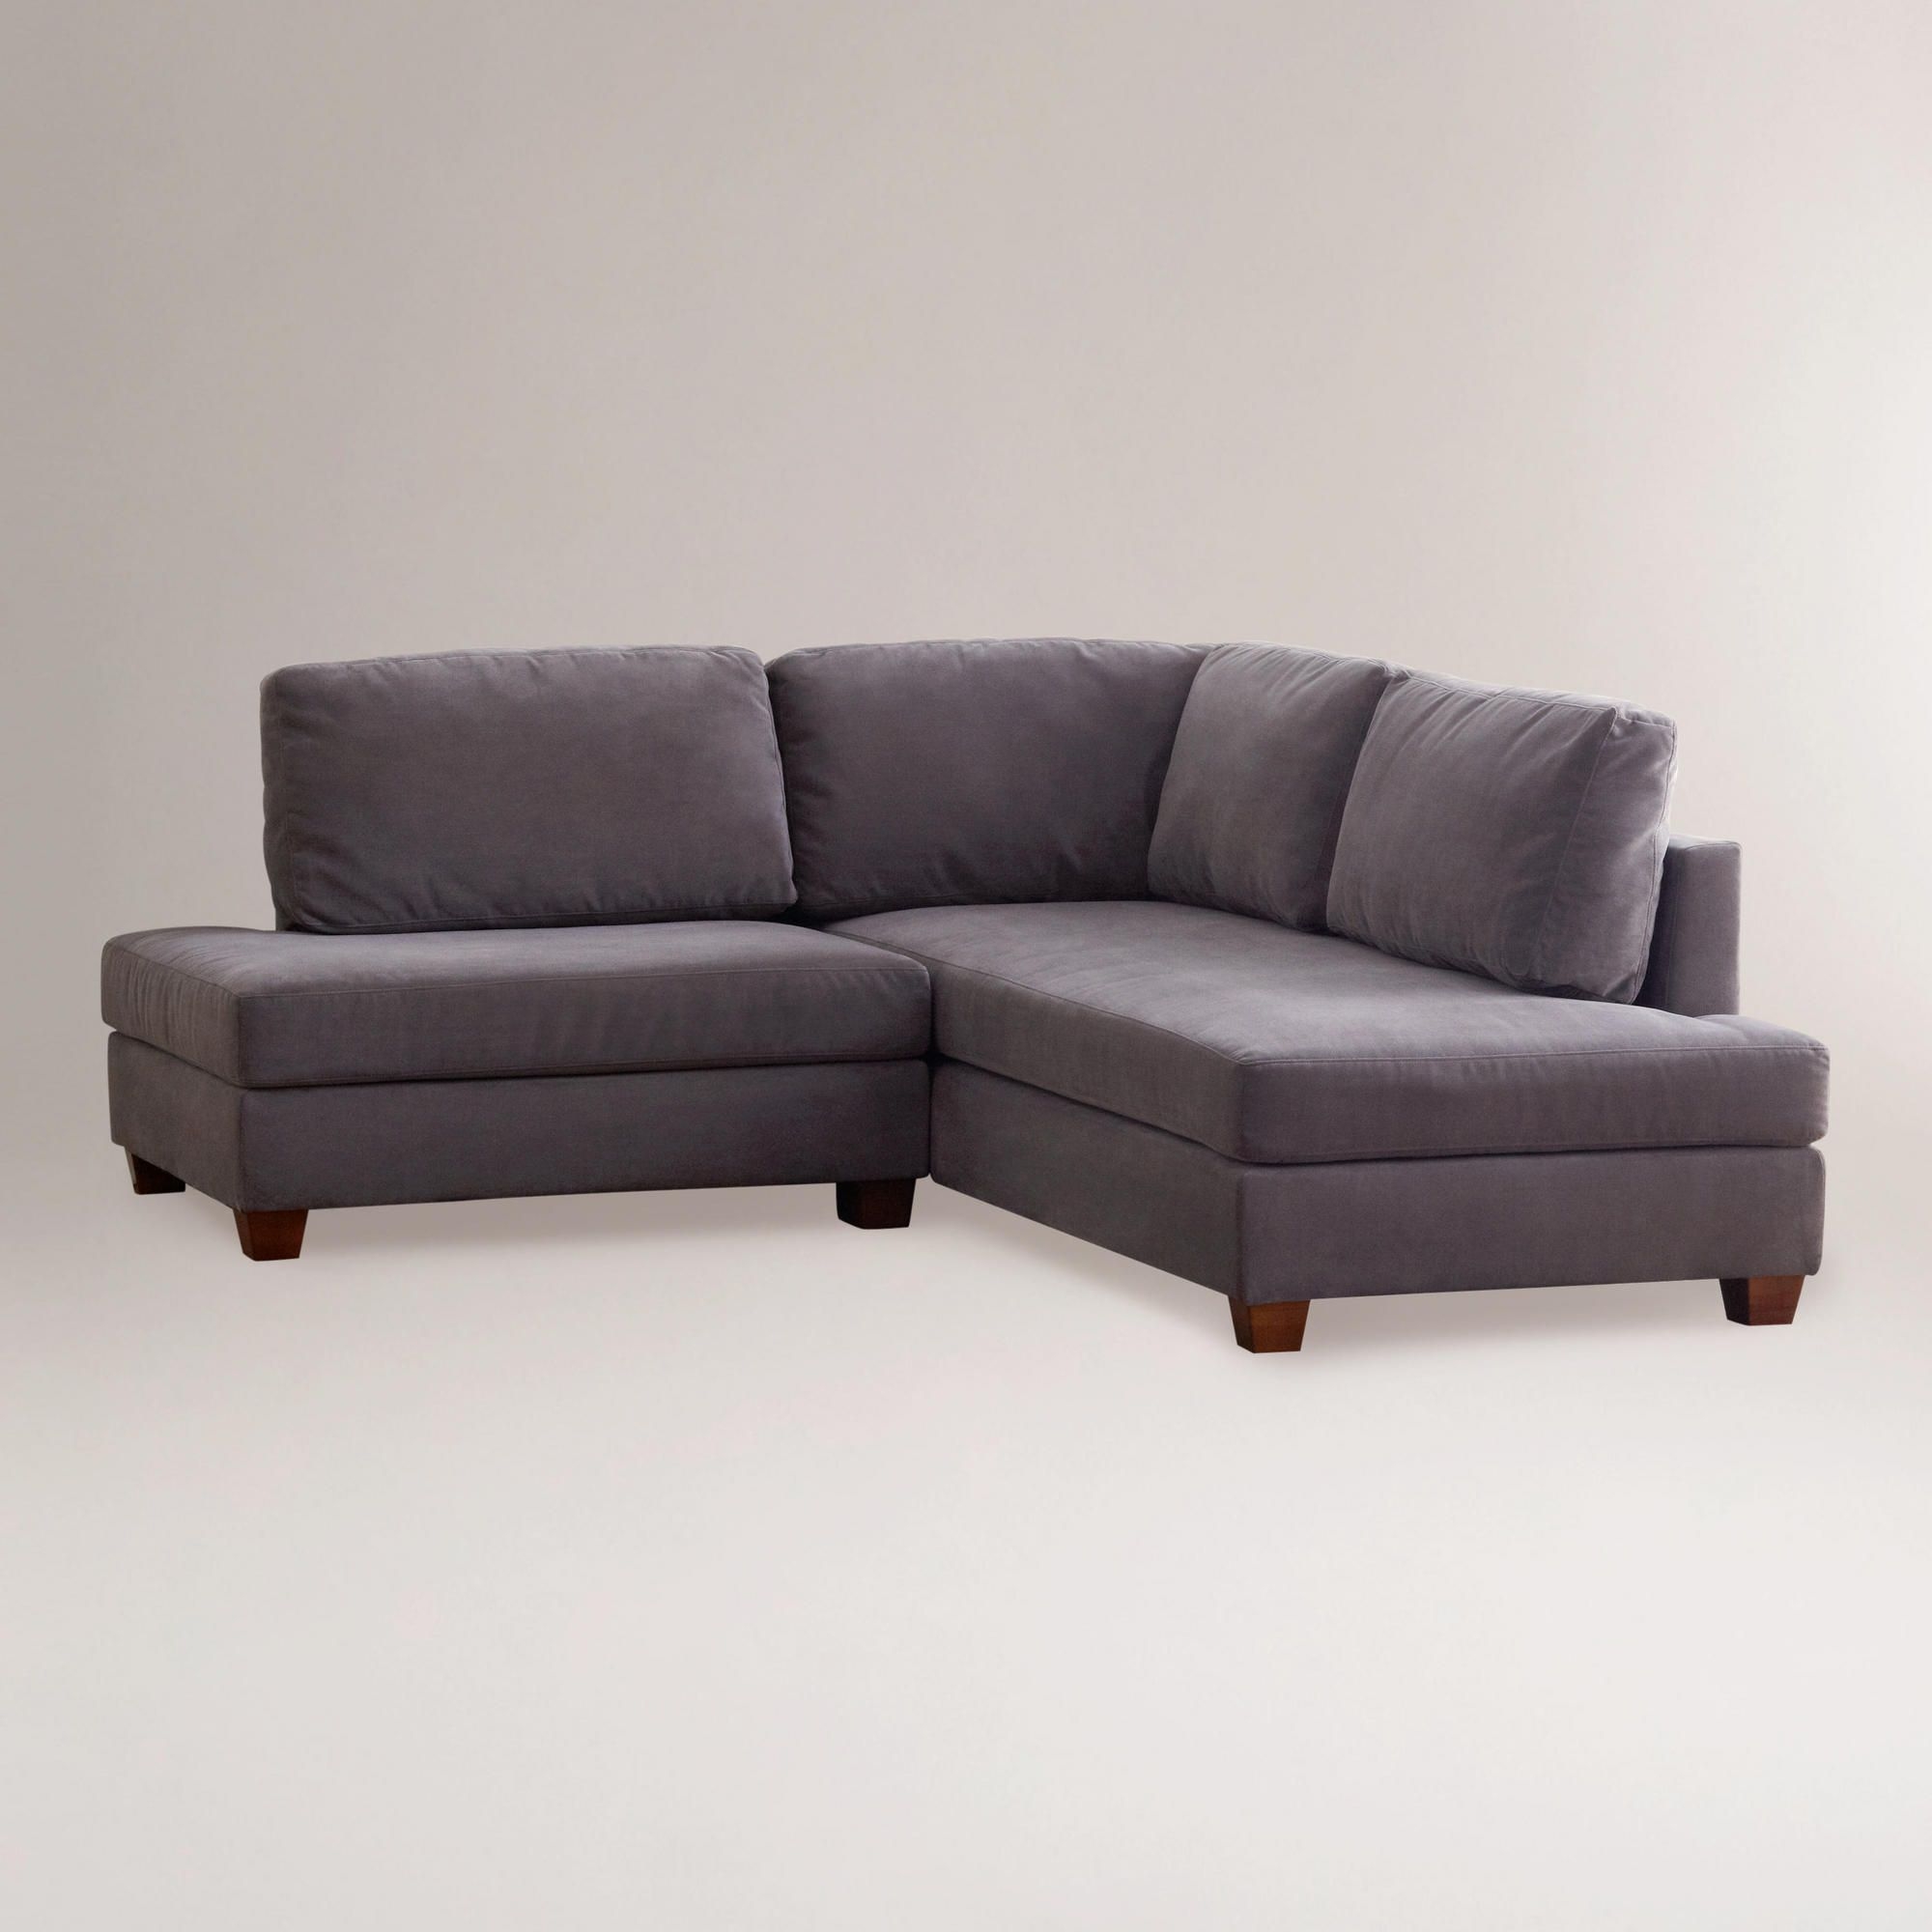 Compact sectional sofa